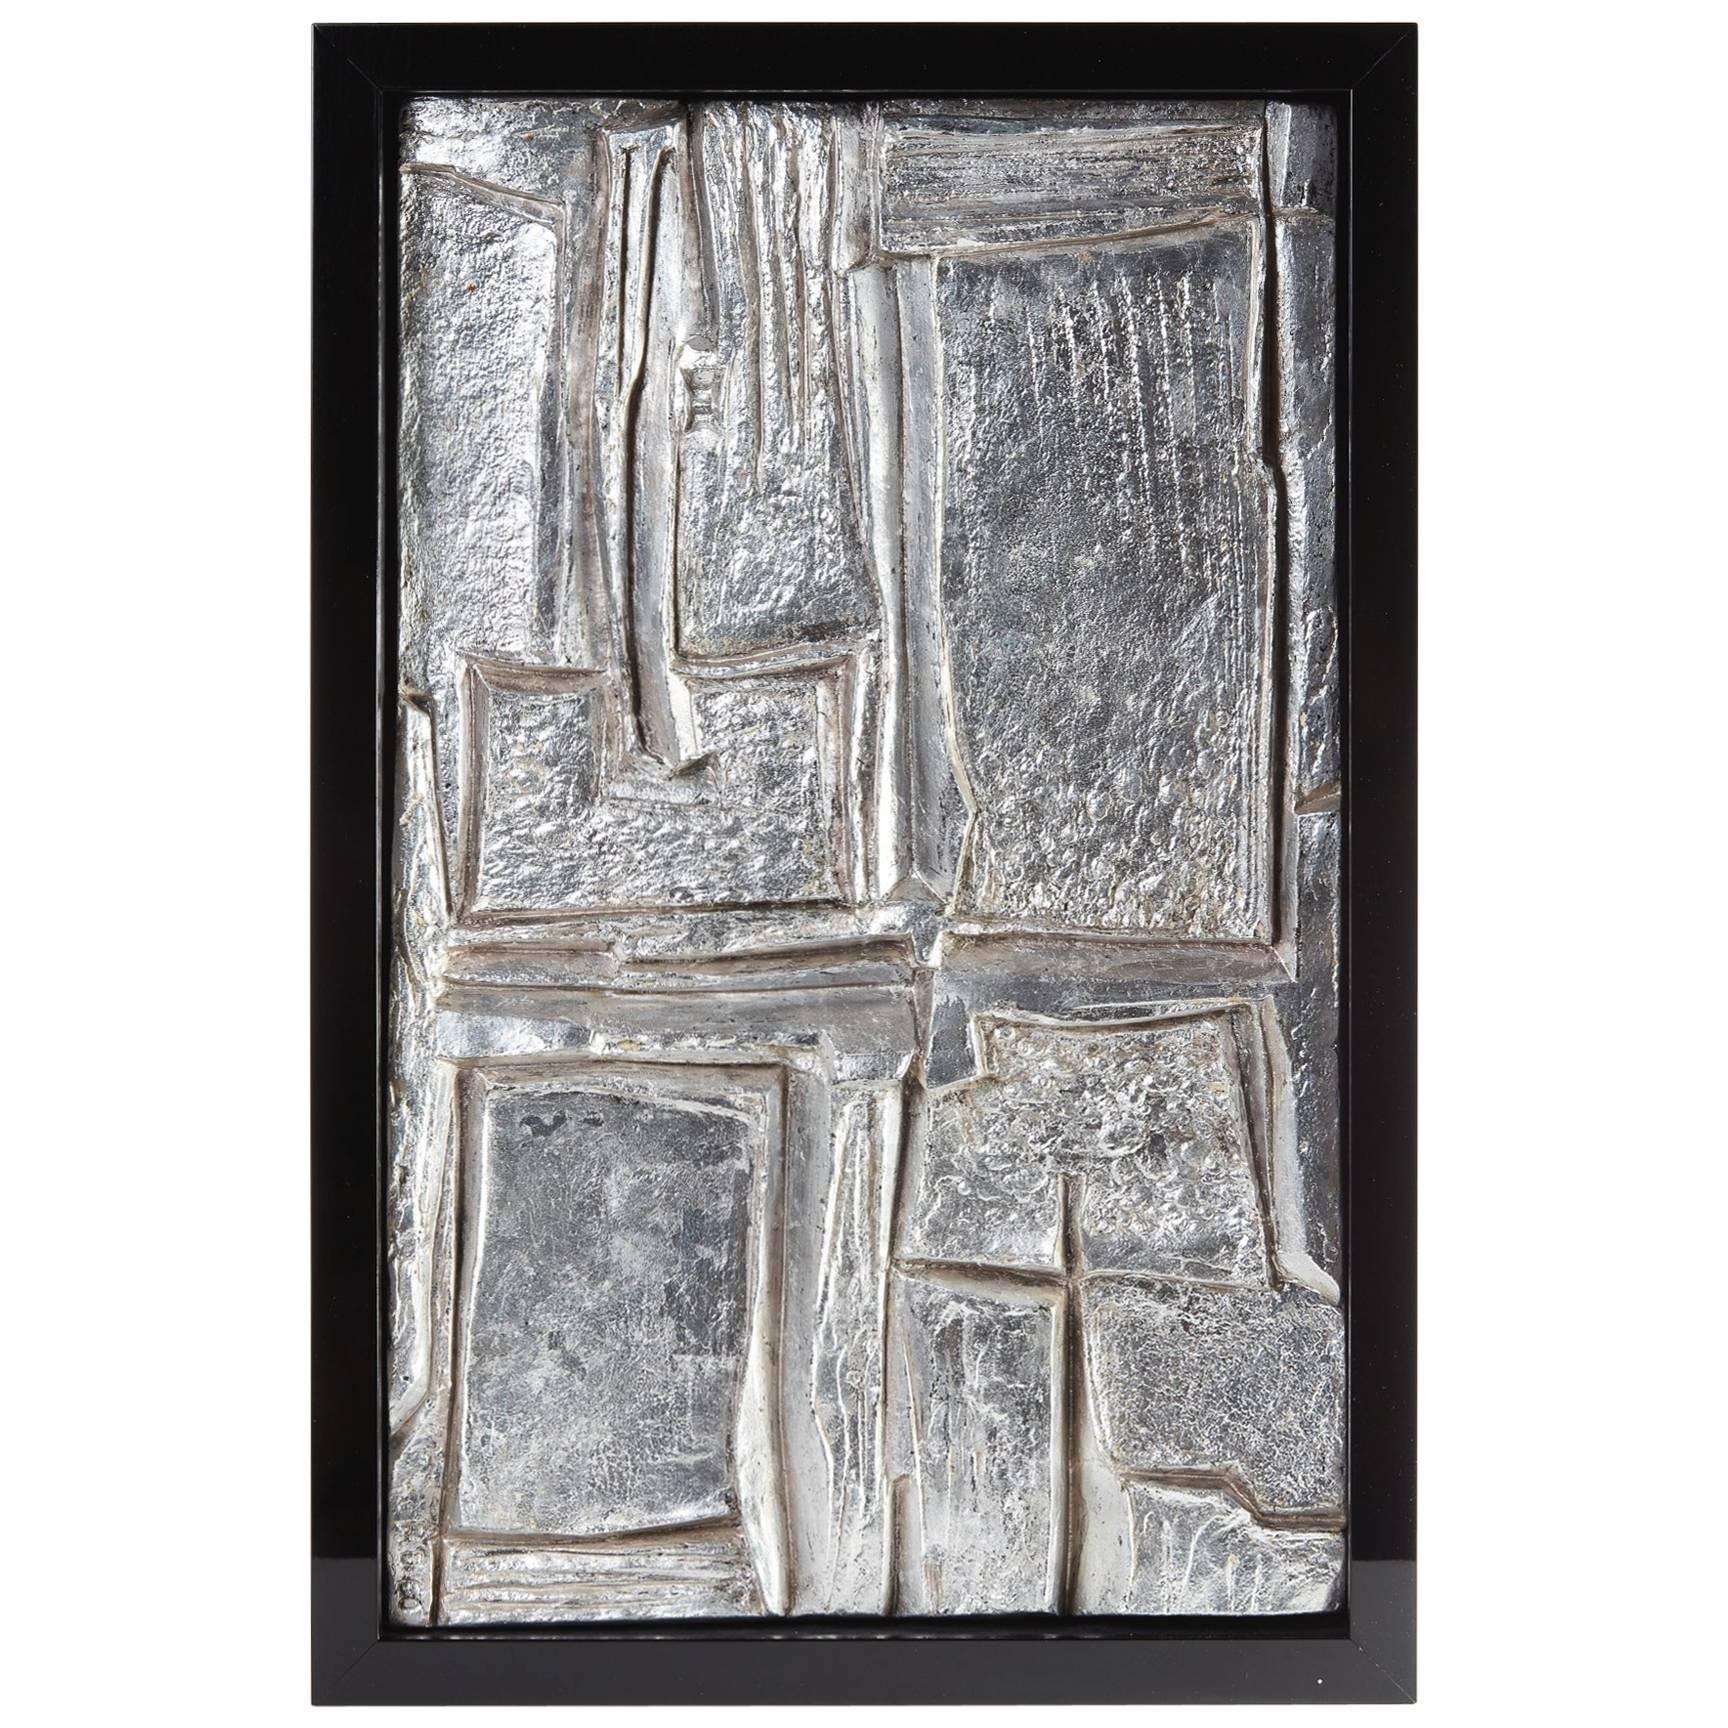 Escultura abstracta francesa de escayola/hoja de plata enmarcada de mediados del siglo XX nº 1